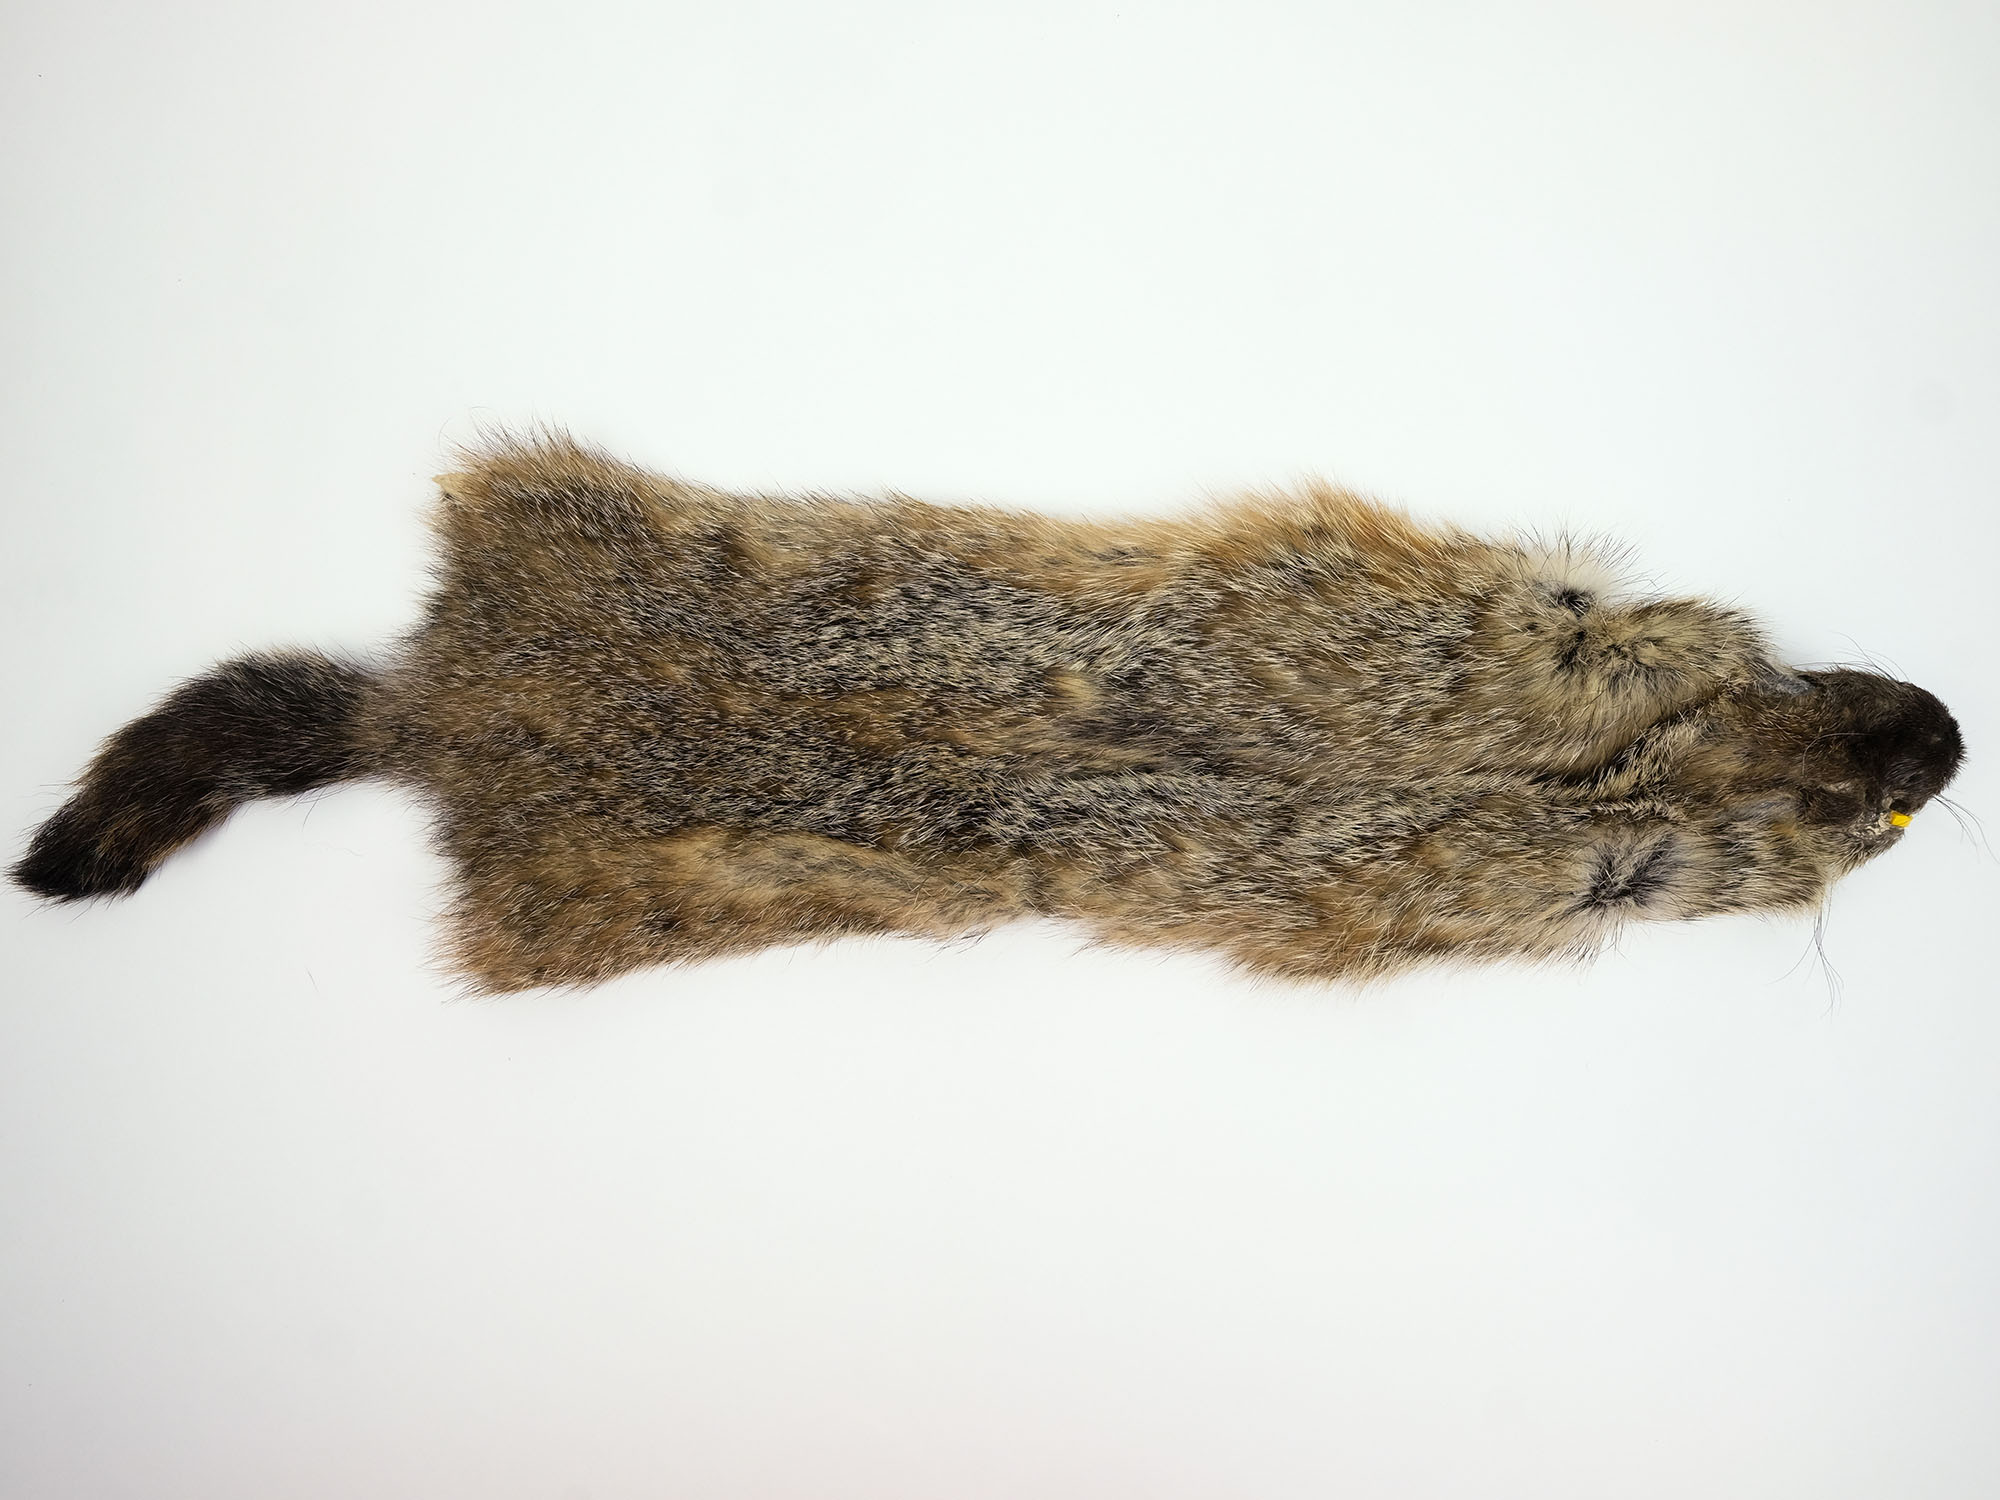 Trading Post Grade Woodchuck (Groundhog) Skin 